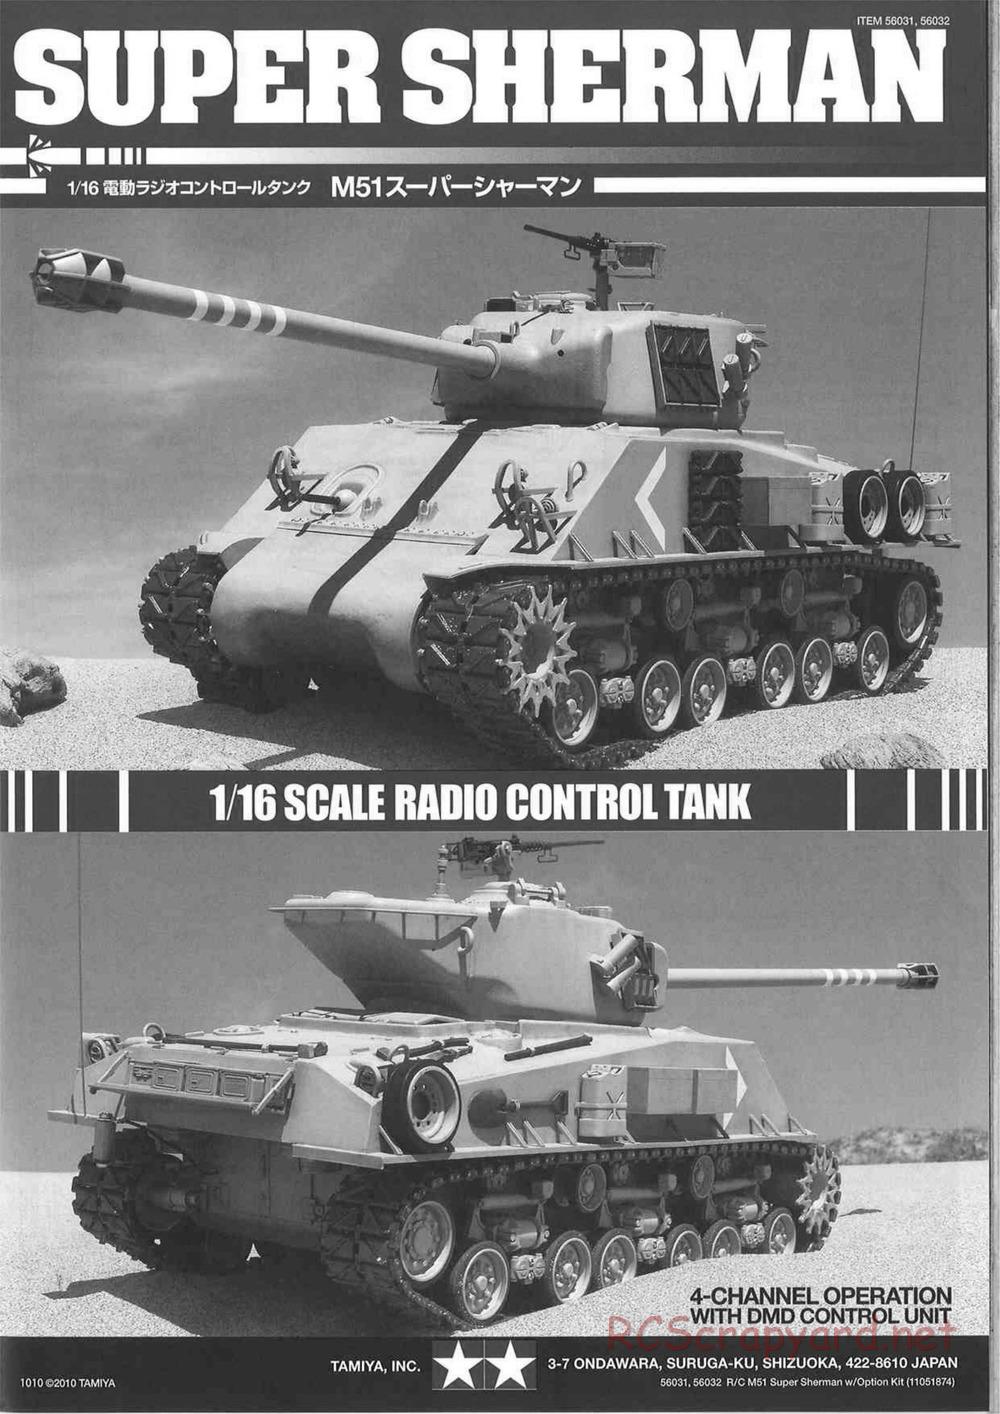 Tamiya - Super Sherman M-51 - 1/16 Scale Chassis - Manual - Page 1